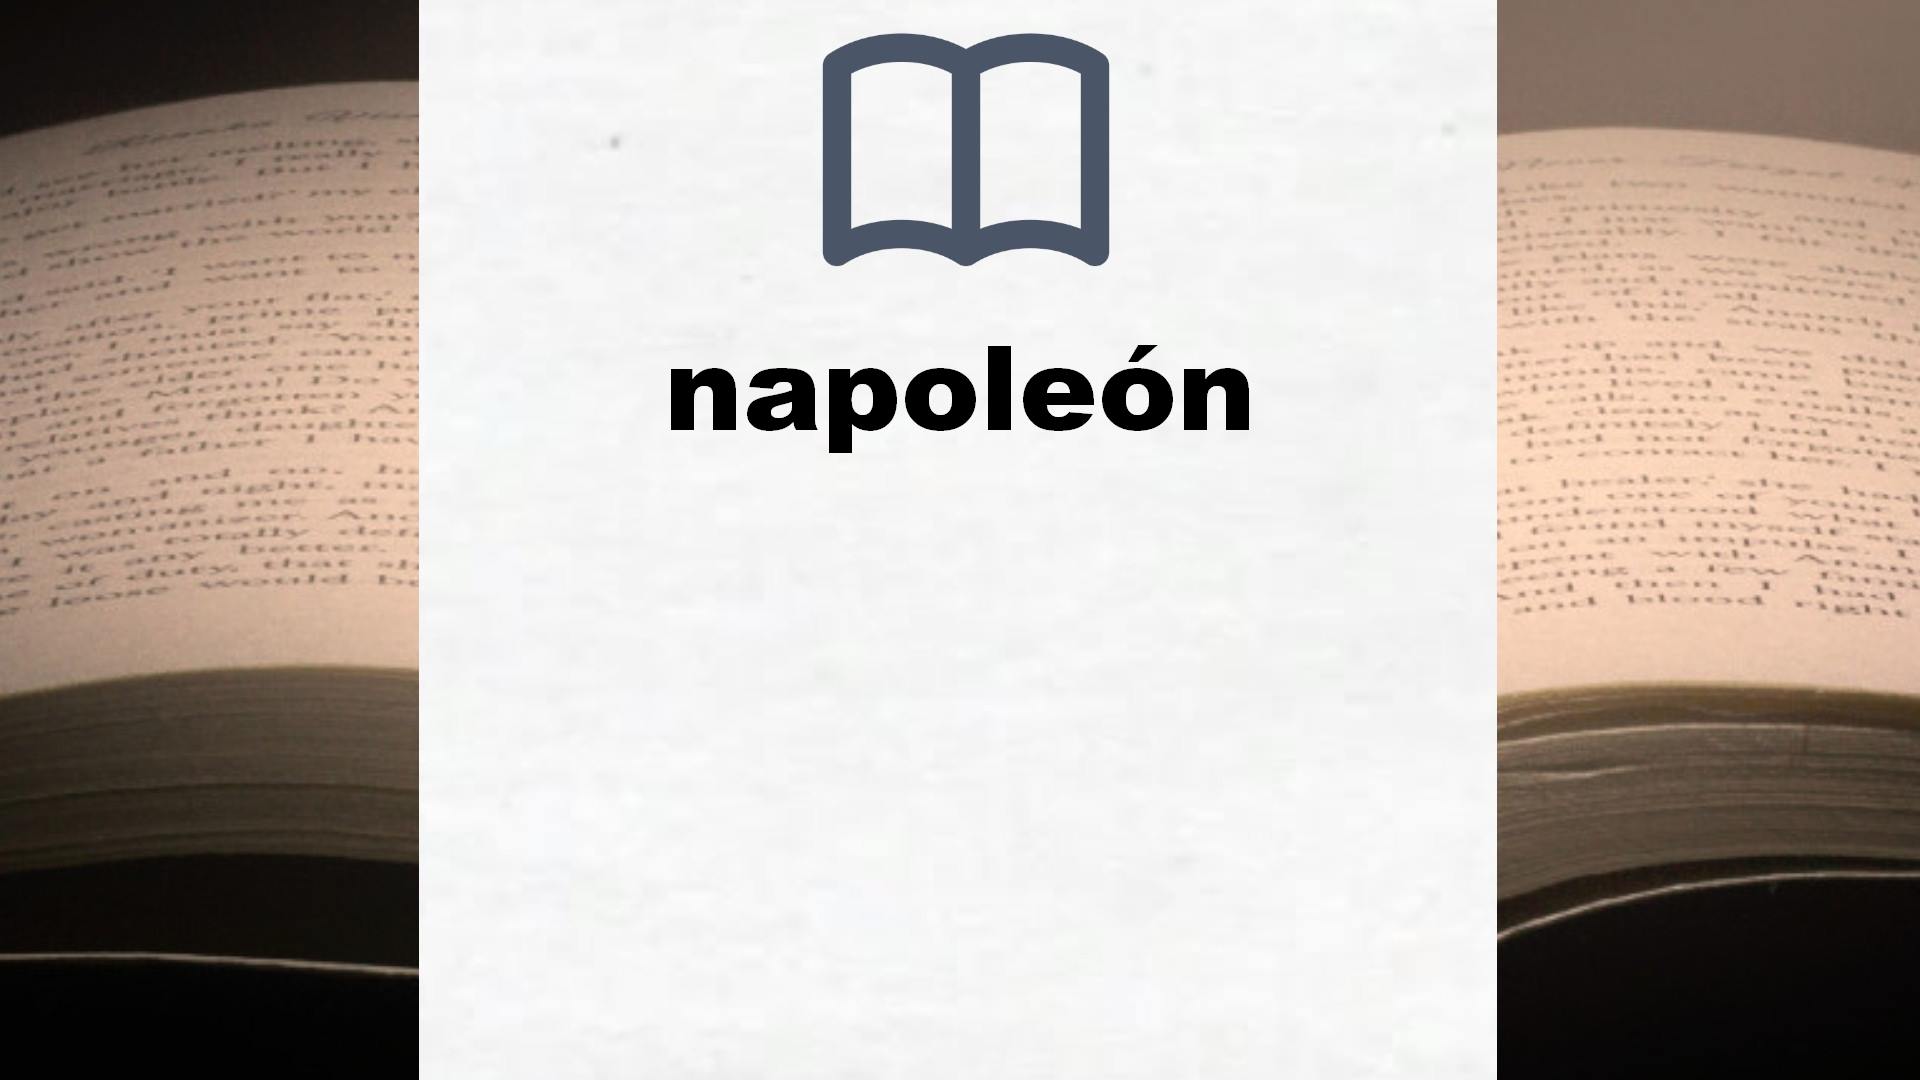 Libros sobre napoleón